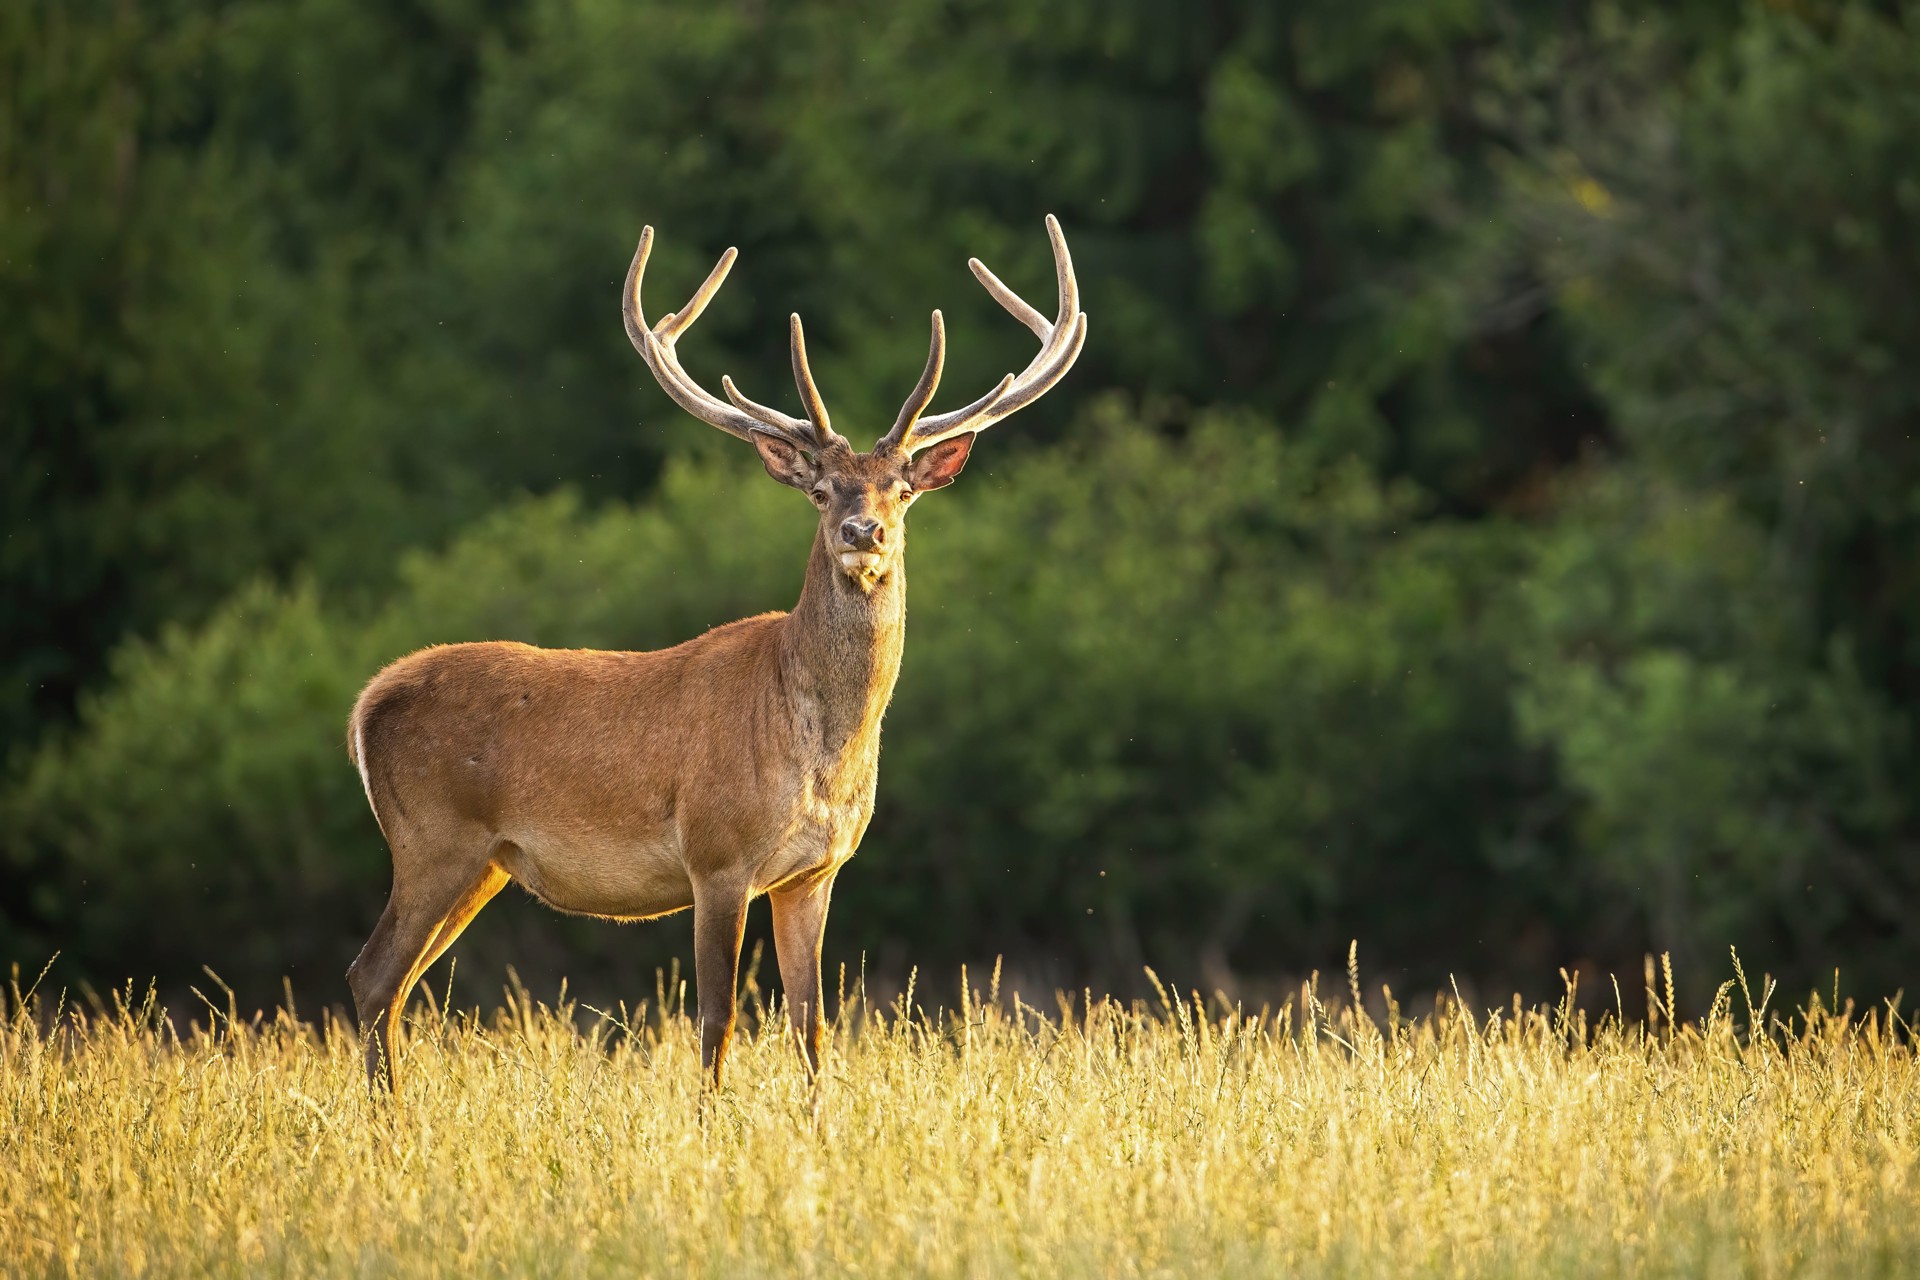 Deer wildlife in Woodland